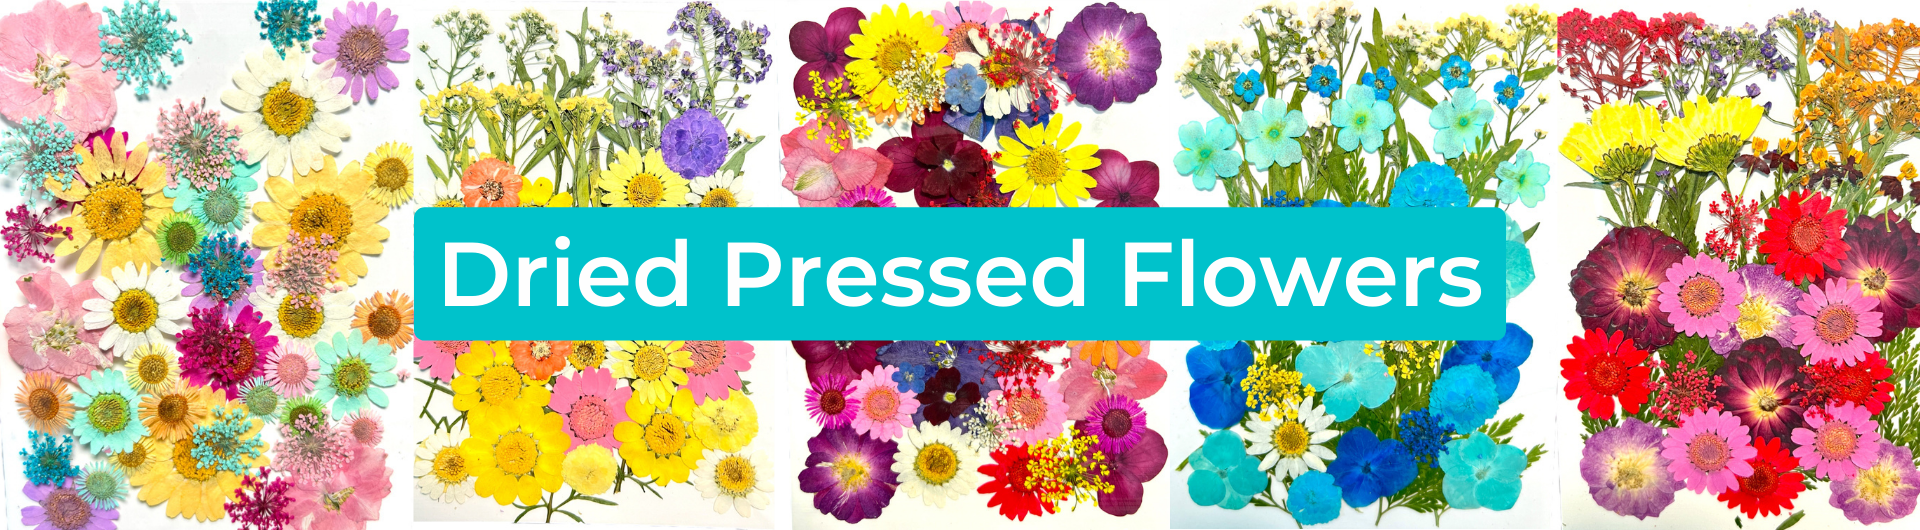 Dried Pressed Flowers